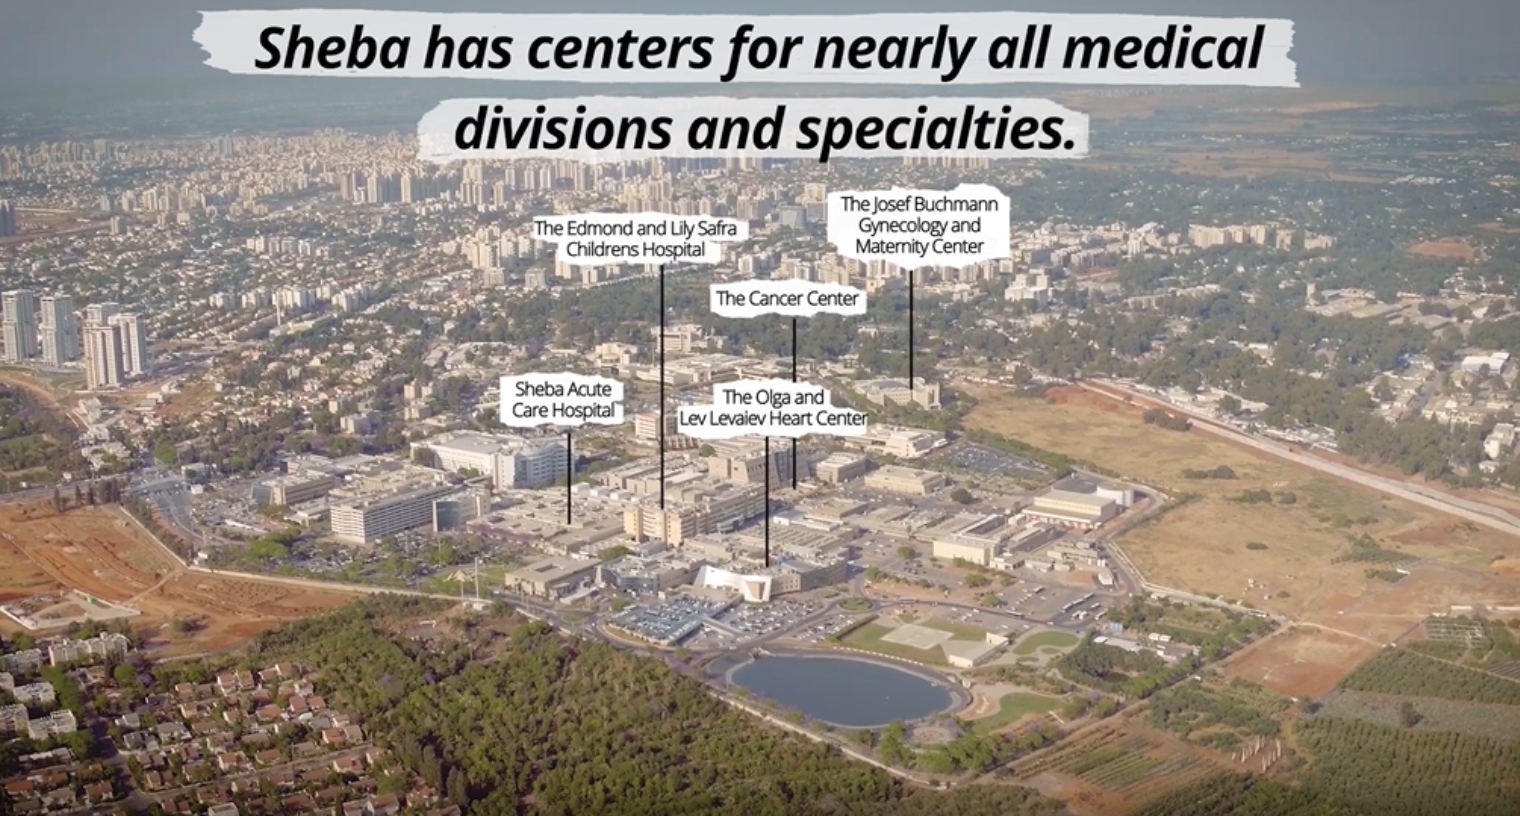 Overview of Sheba Medical Center in Ramat Gan